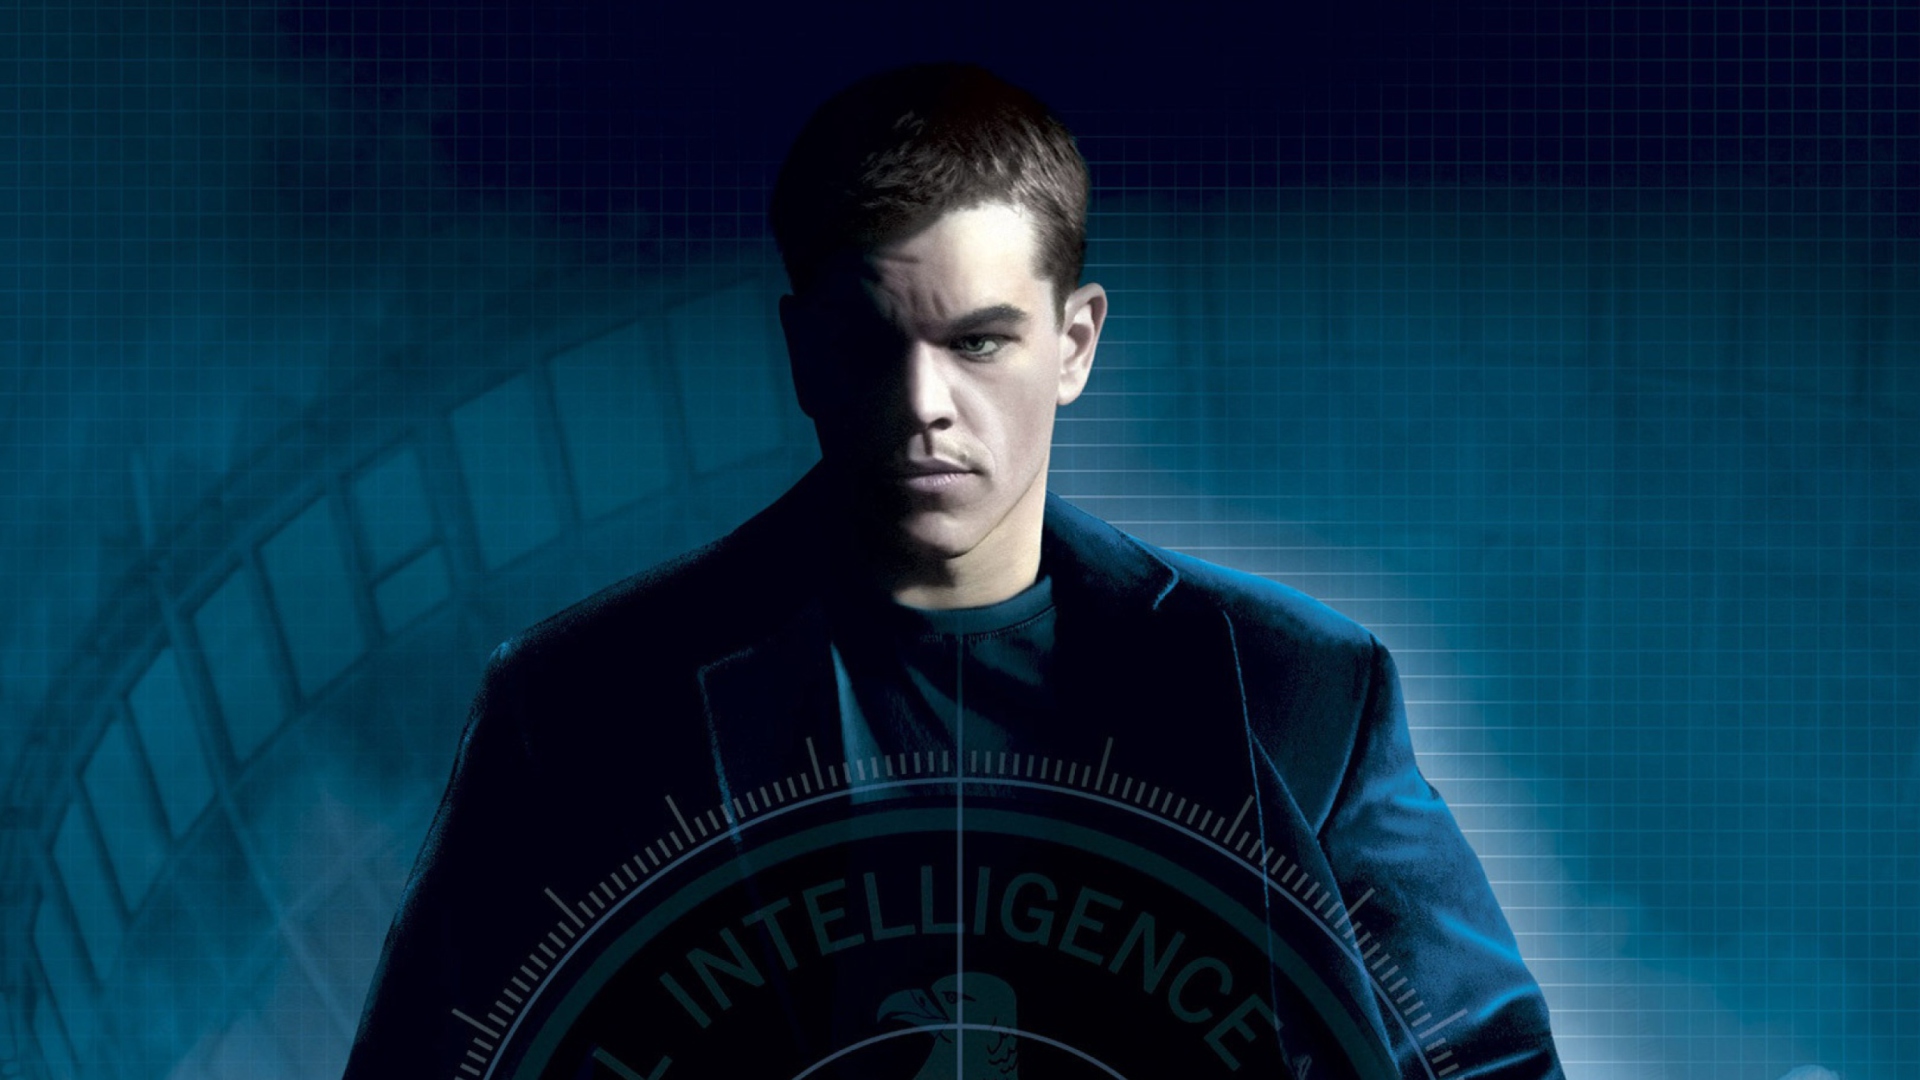 Das Matt Damon In Bourne Movies Wallpaper 1920x1080